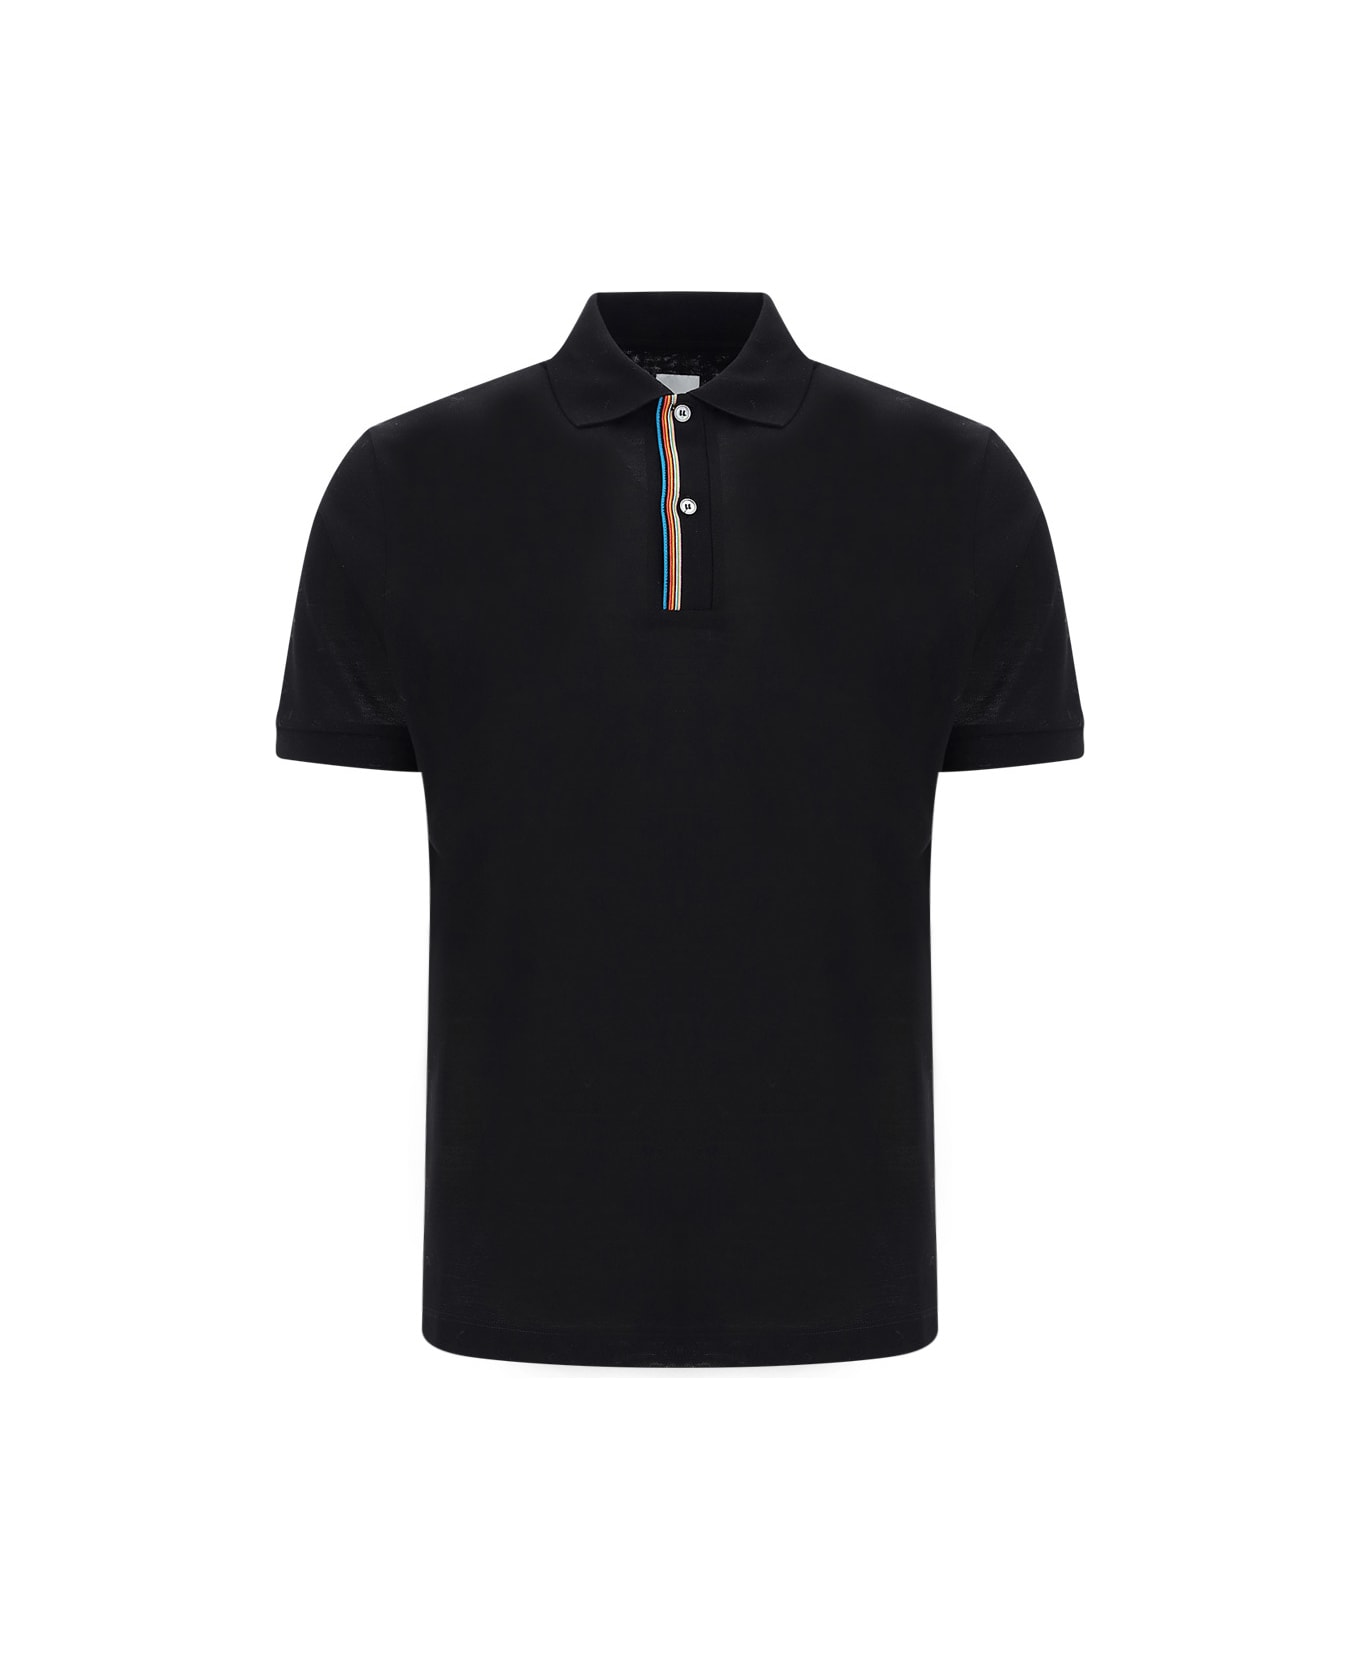 Paul Smith Gents Polo Shirt - Black